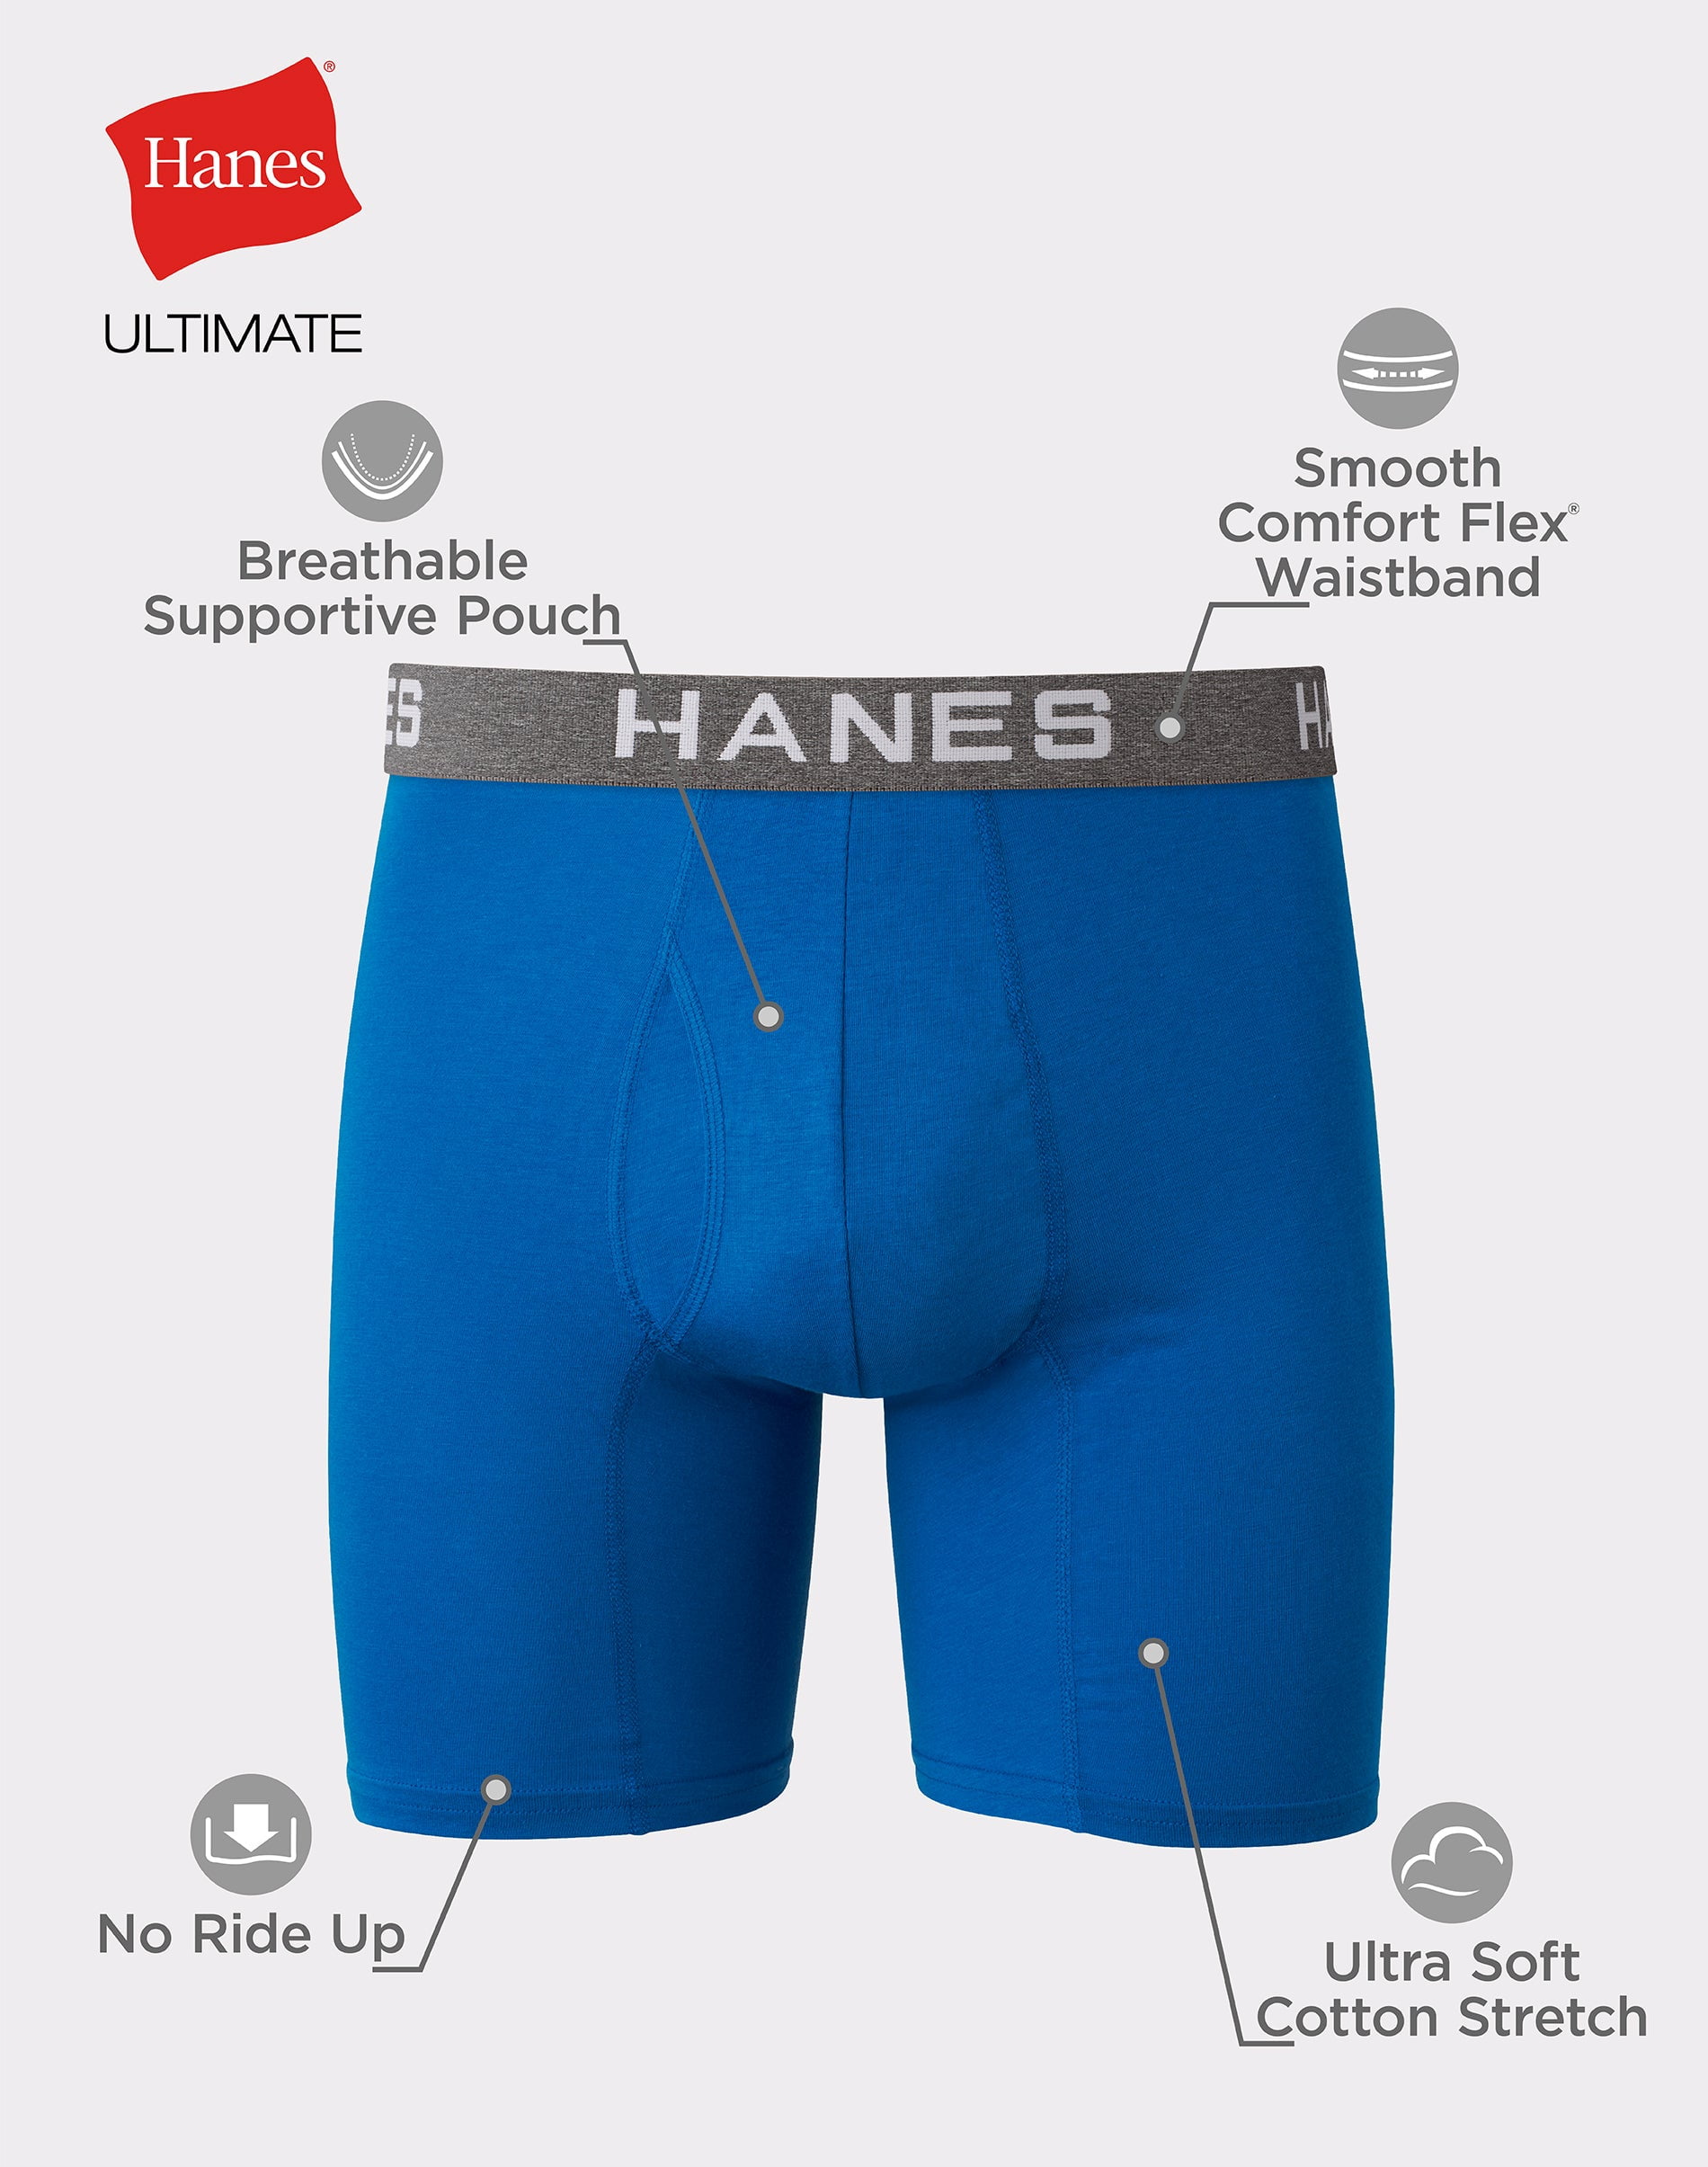 Other Men's Accessories - Supreme®/Hanes® Boxer Briefs (4 Pack), 99HAA36  UPC: 0888977026243